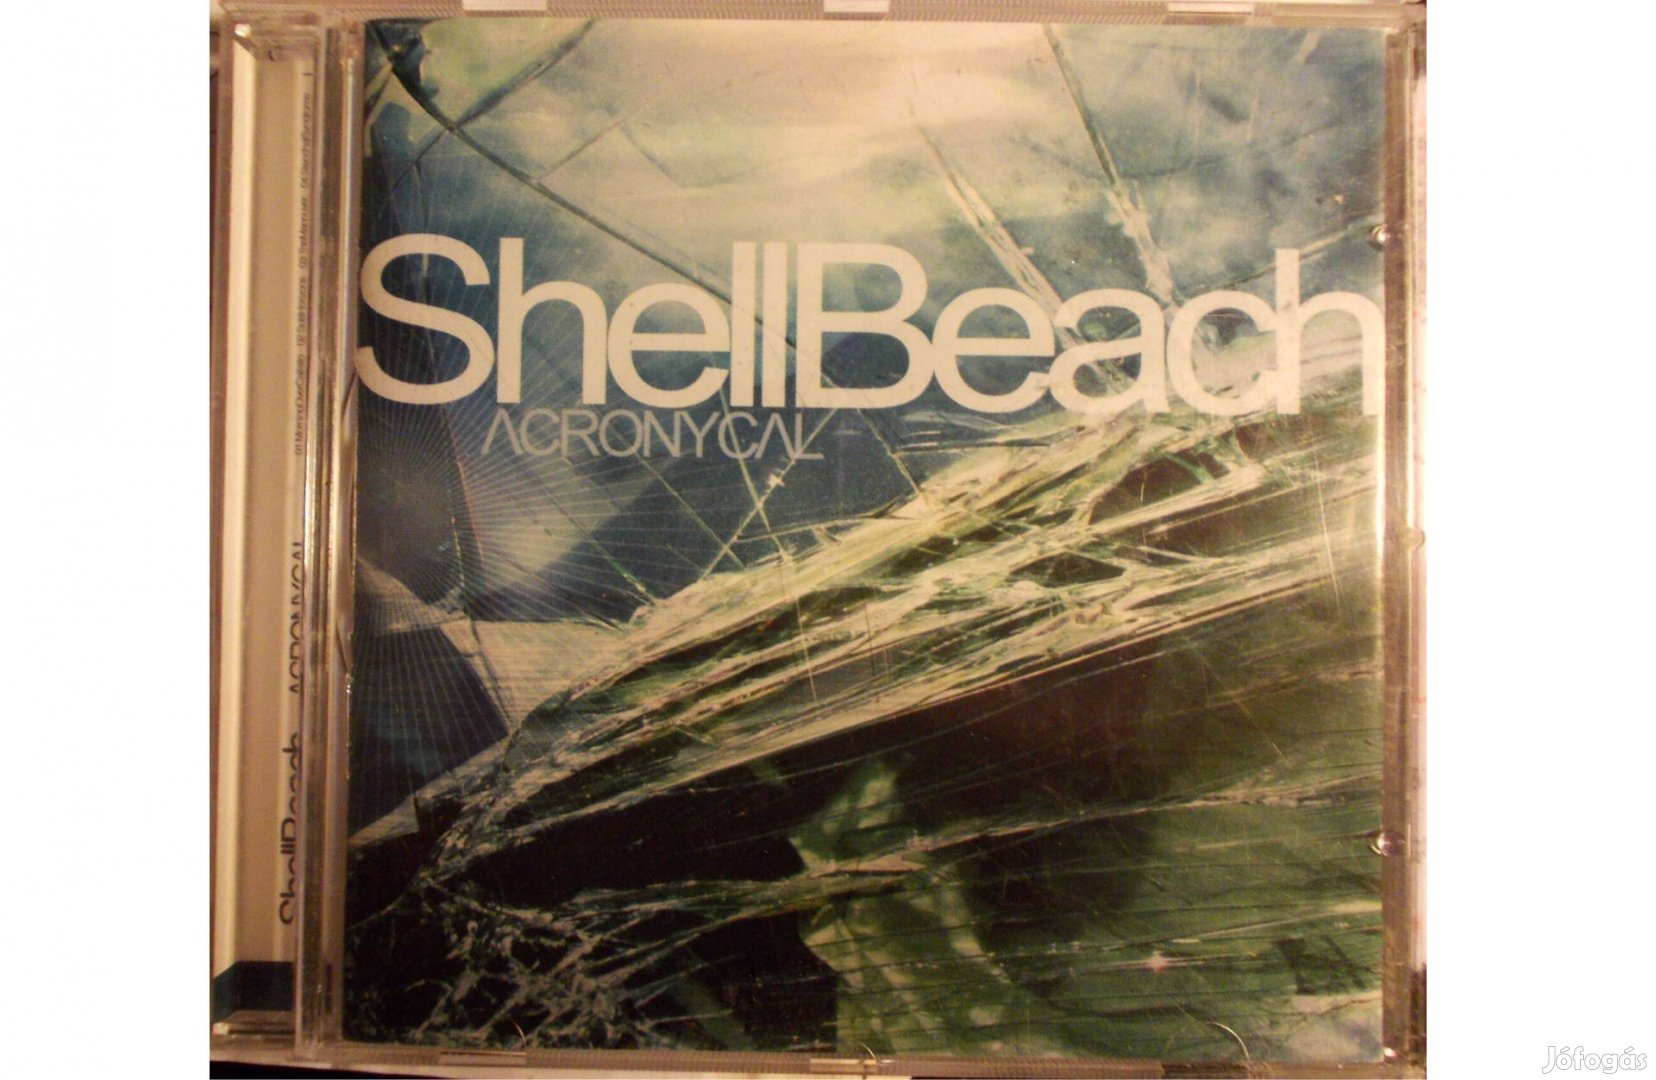 Shell Beach, Acronycal, 2007 nem hallgatott audio-CD